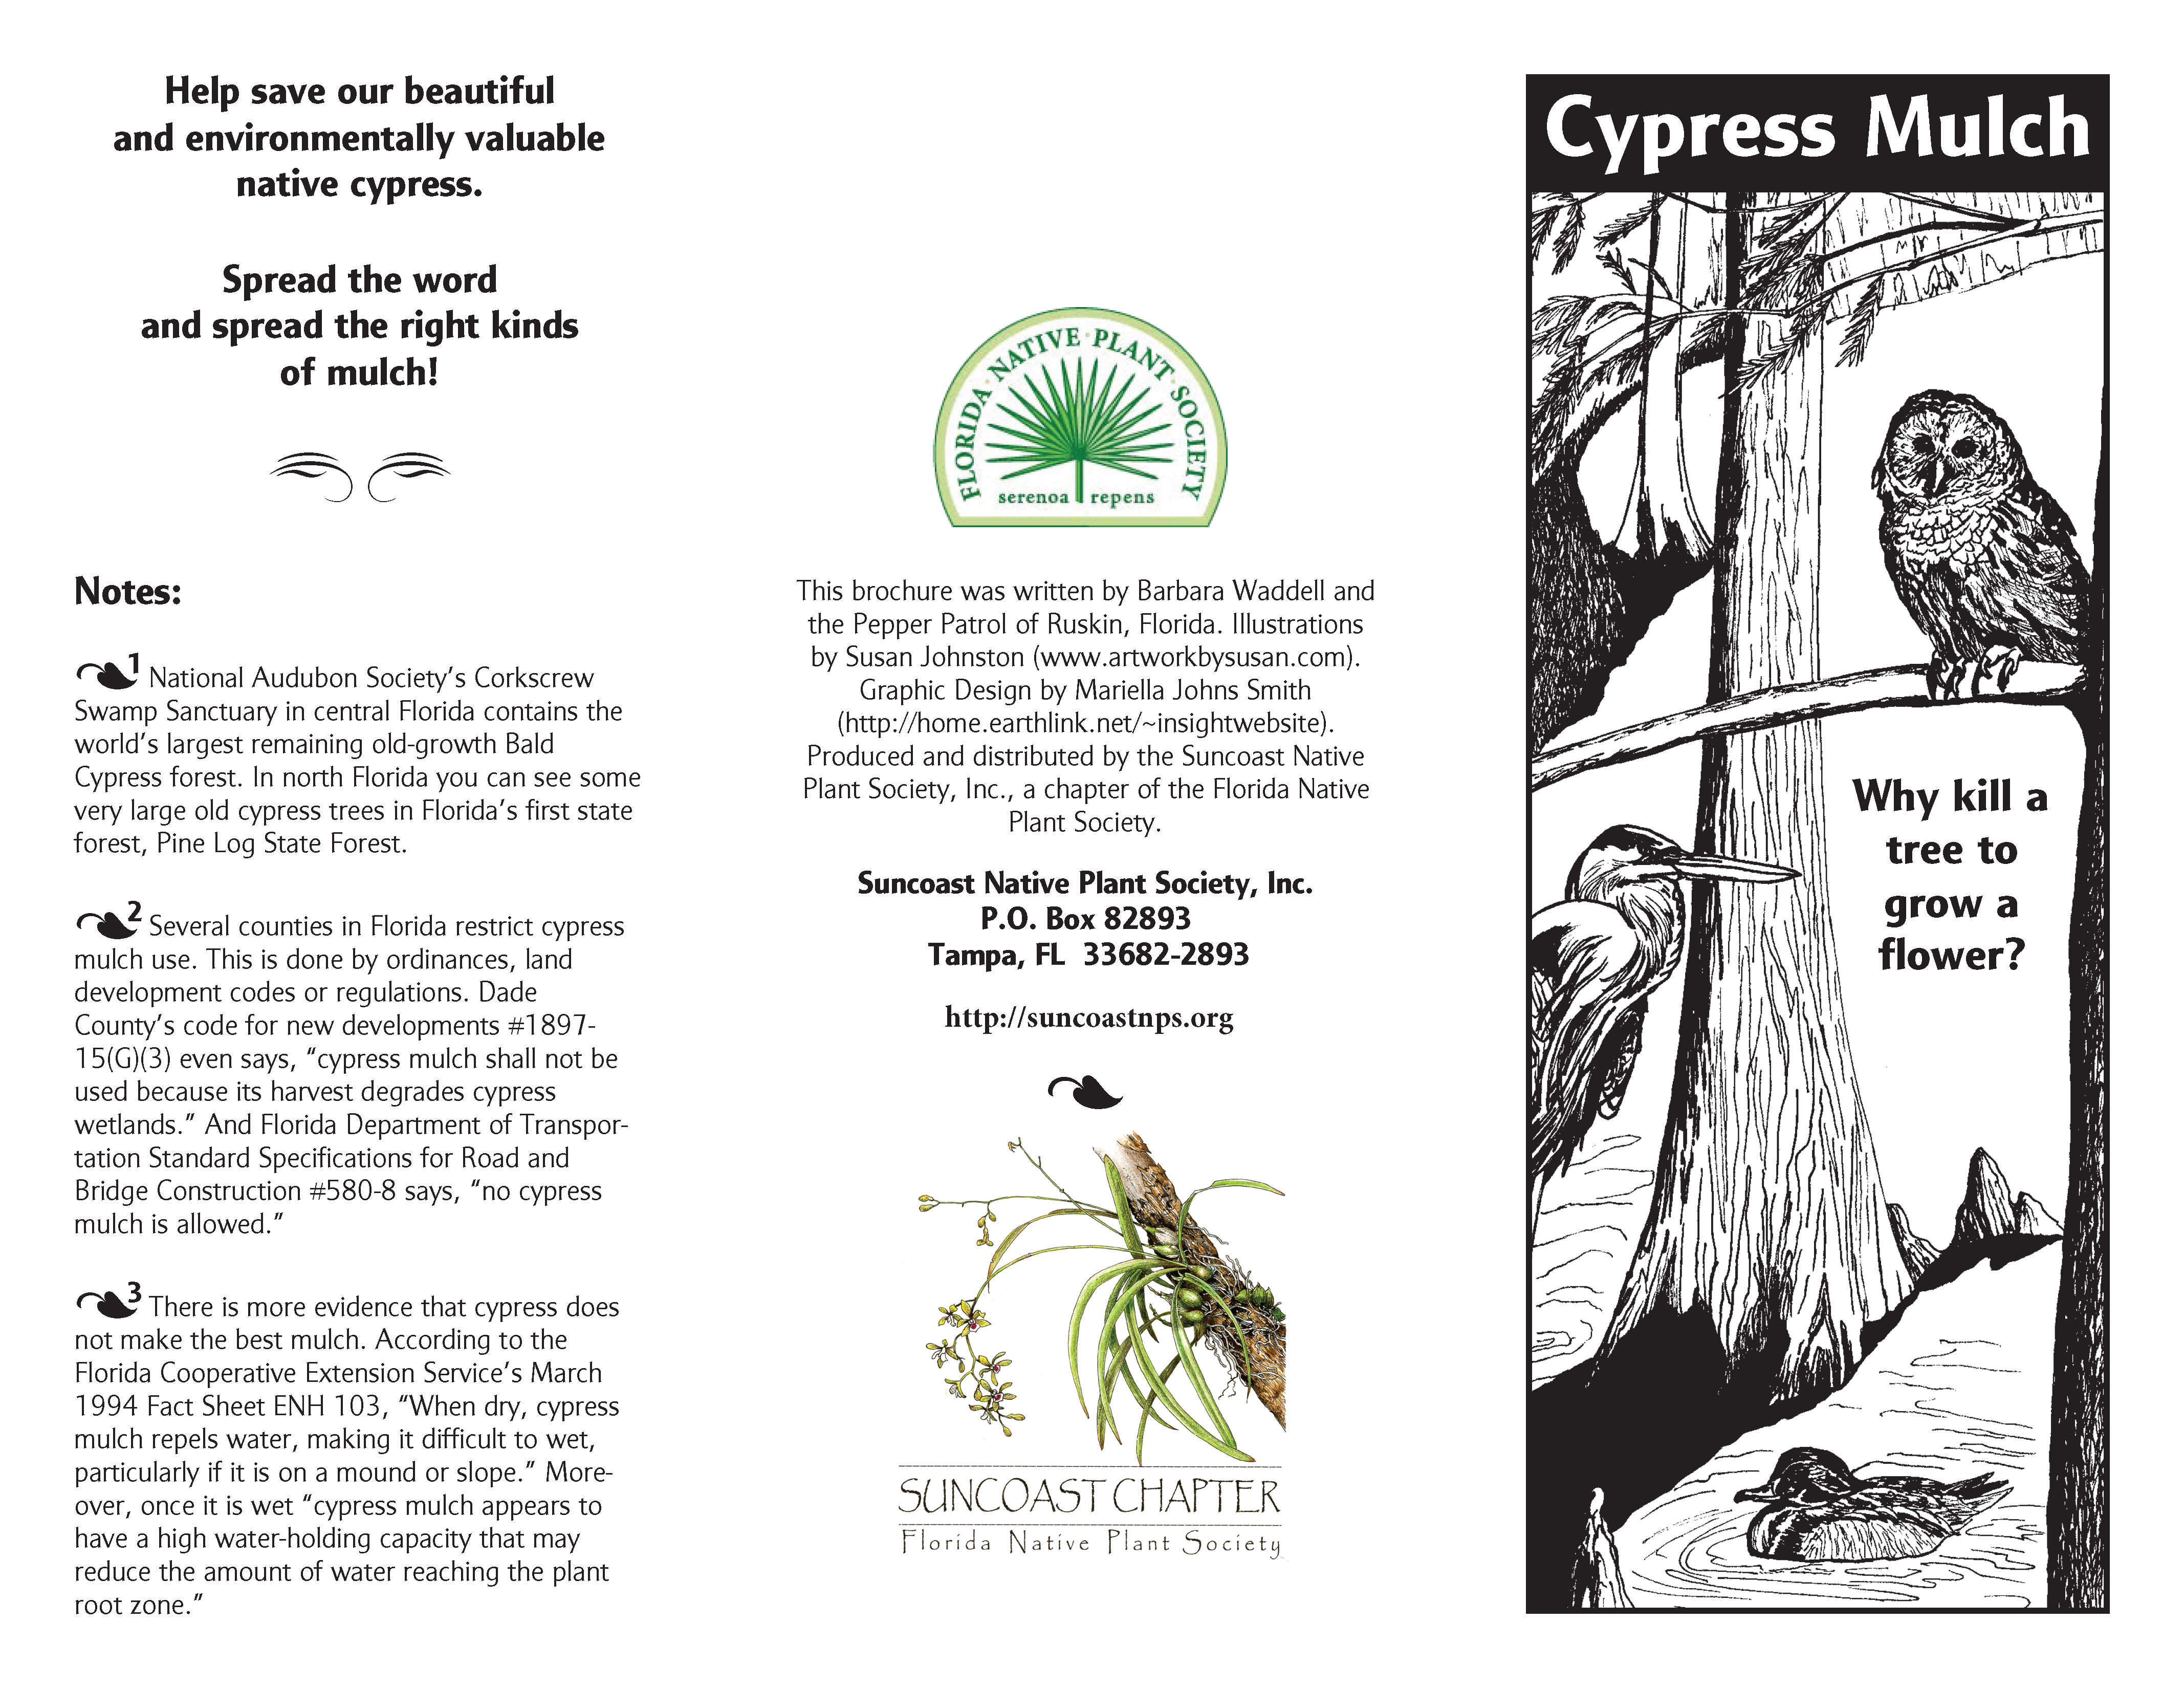 Do Not Use Cypress Mulch Brochure